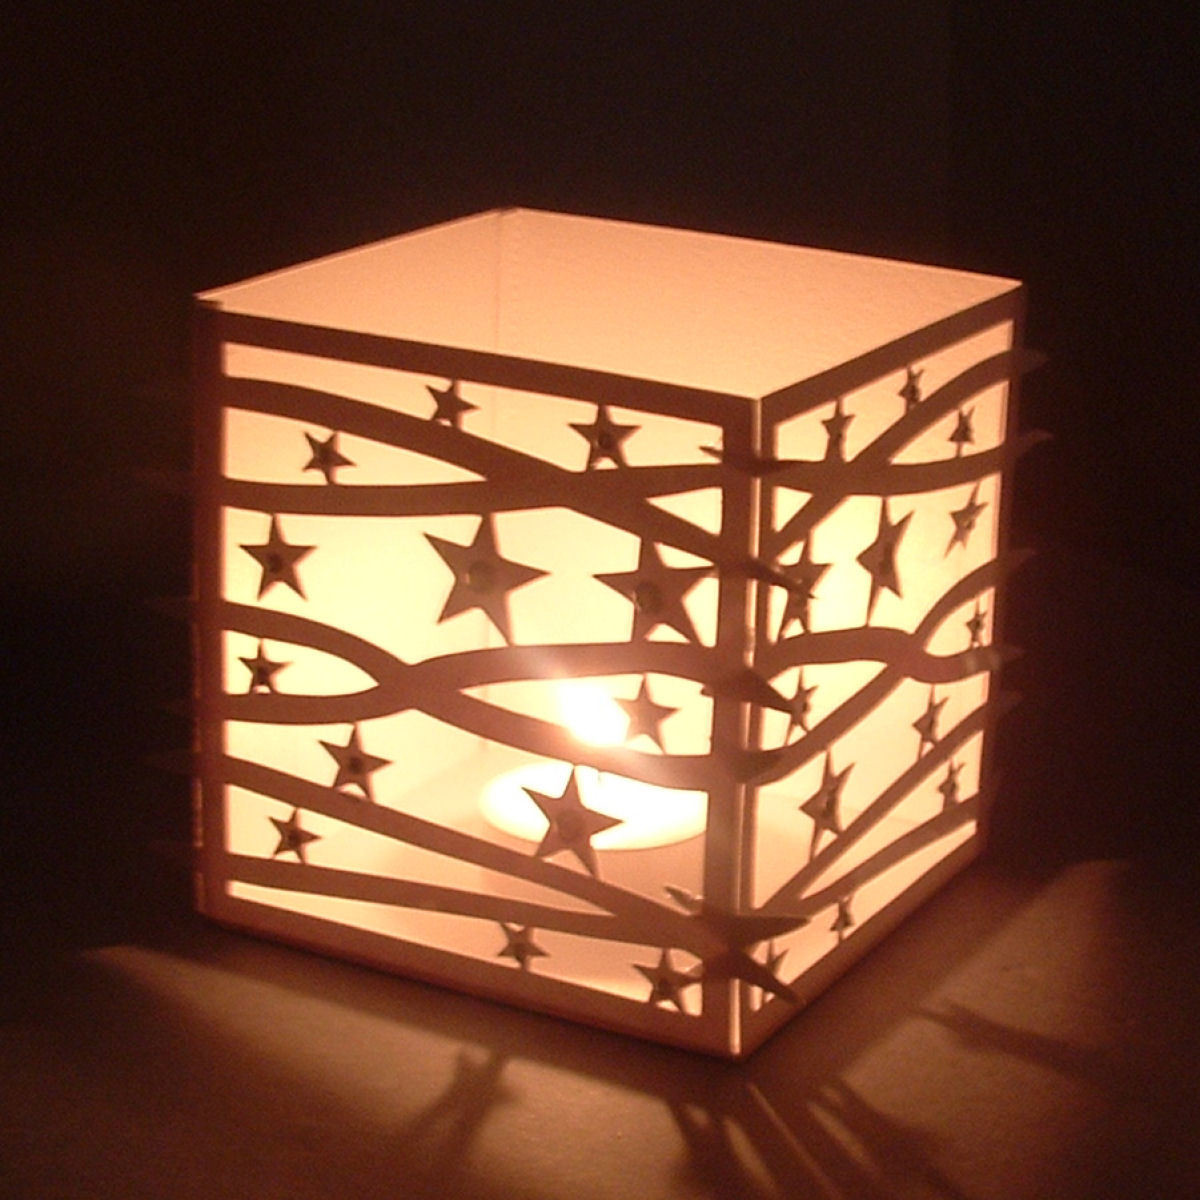 Cube - star pattern luminaire